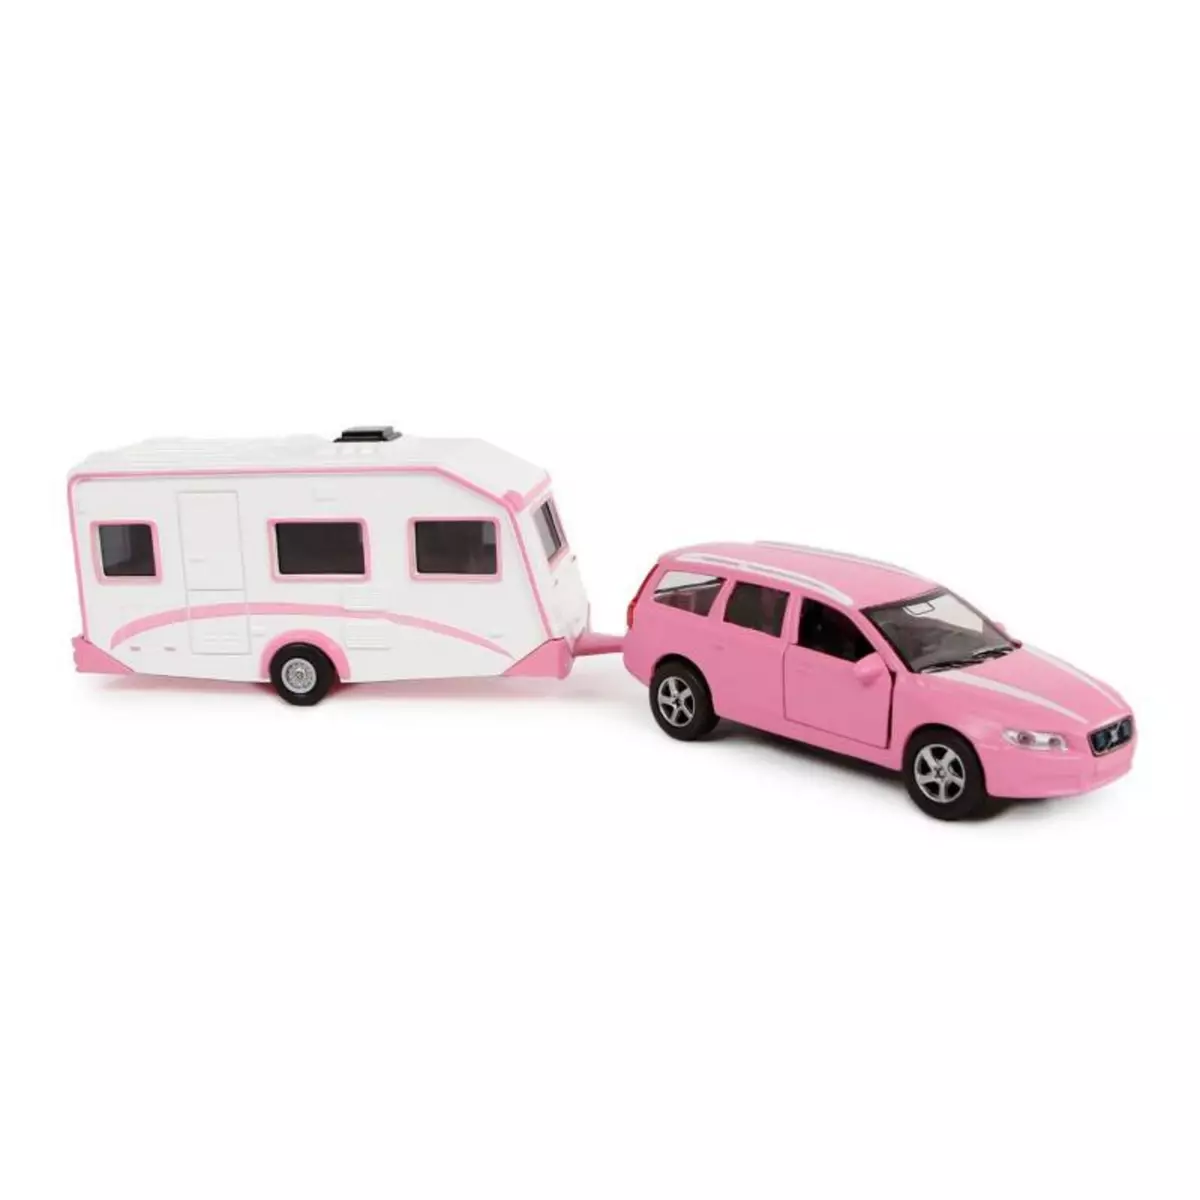 GLOB KIDS Kids Globe Die-cast Volvo V70 with Caravan - Pink, 30cm